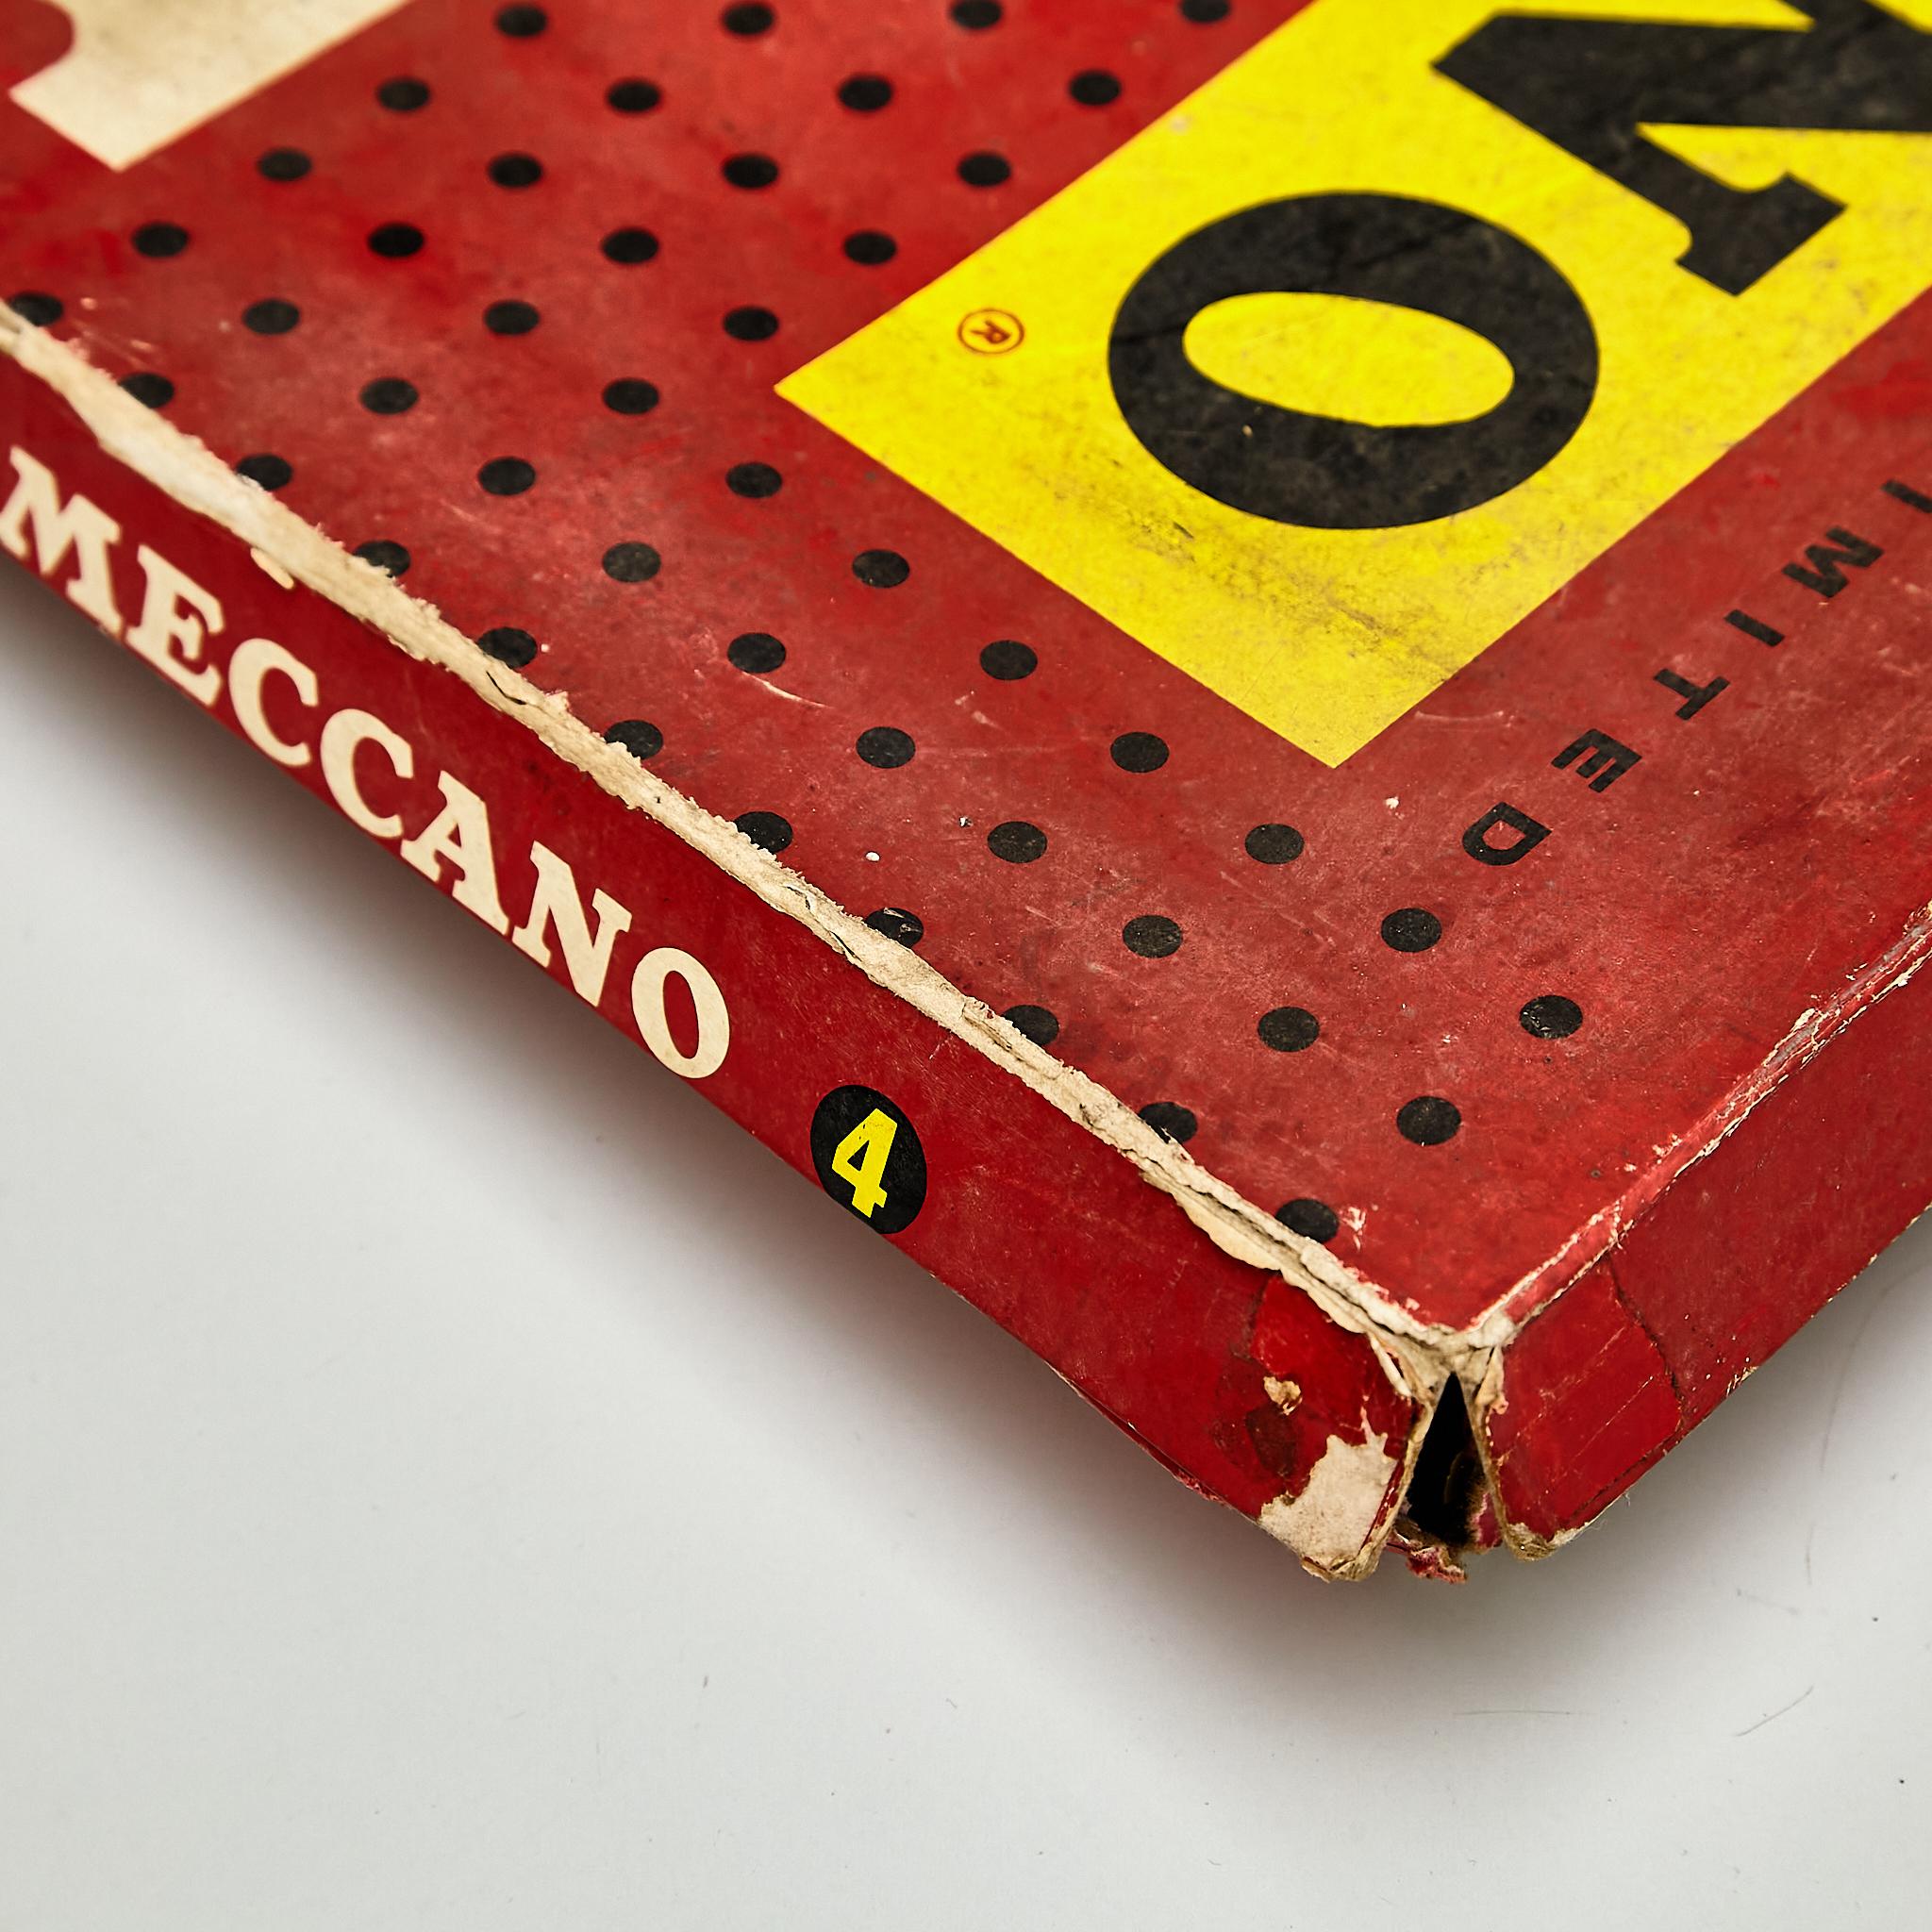 Vintage Meccano Building Game in Original Box For Sale 1